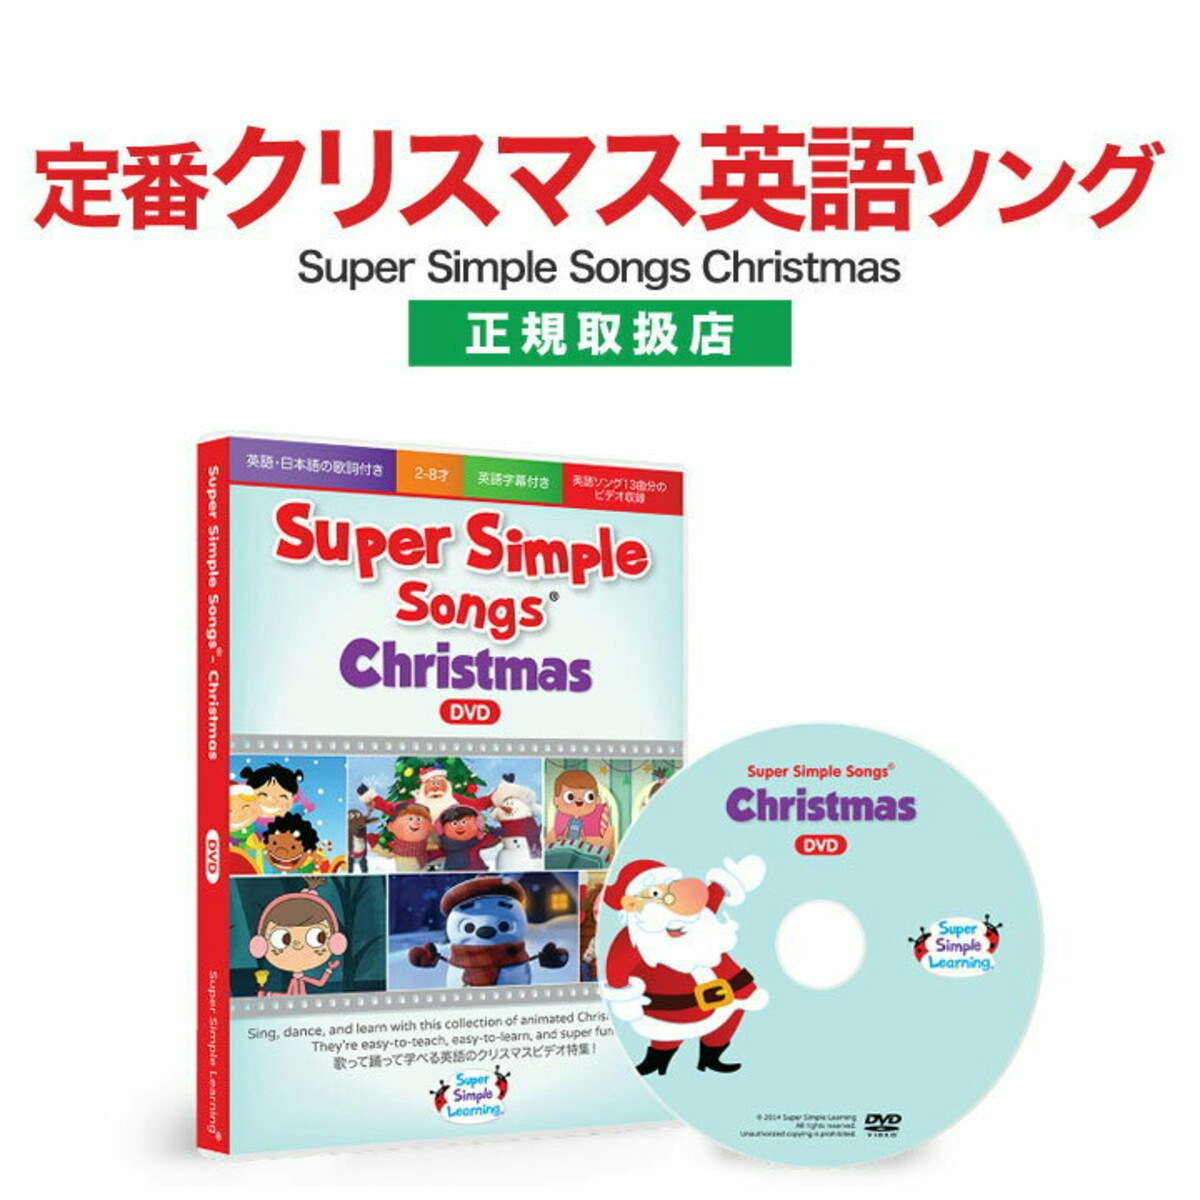  Super Simple Songs Christmas DVD クリスマス